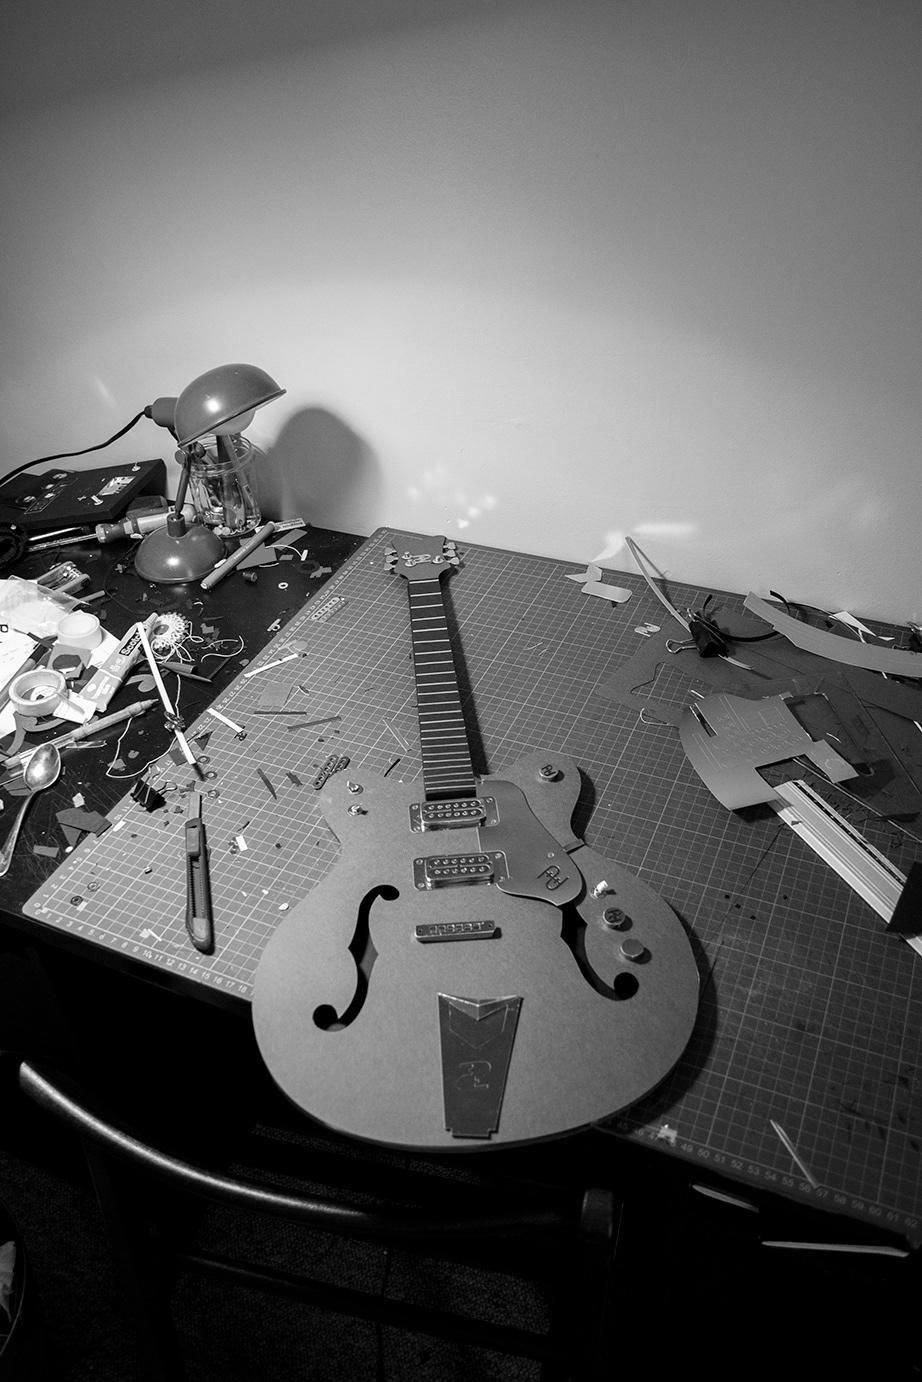 paper papercraft craft papier maquette rock Kubrick Rock'n pat model Gain appât amplificator Amps guitar